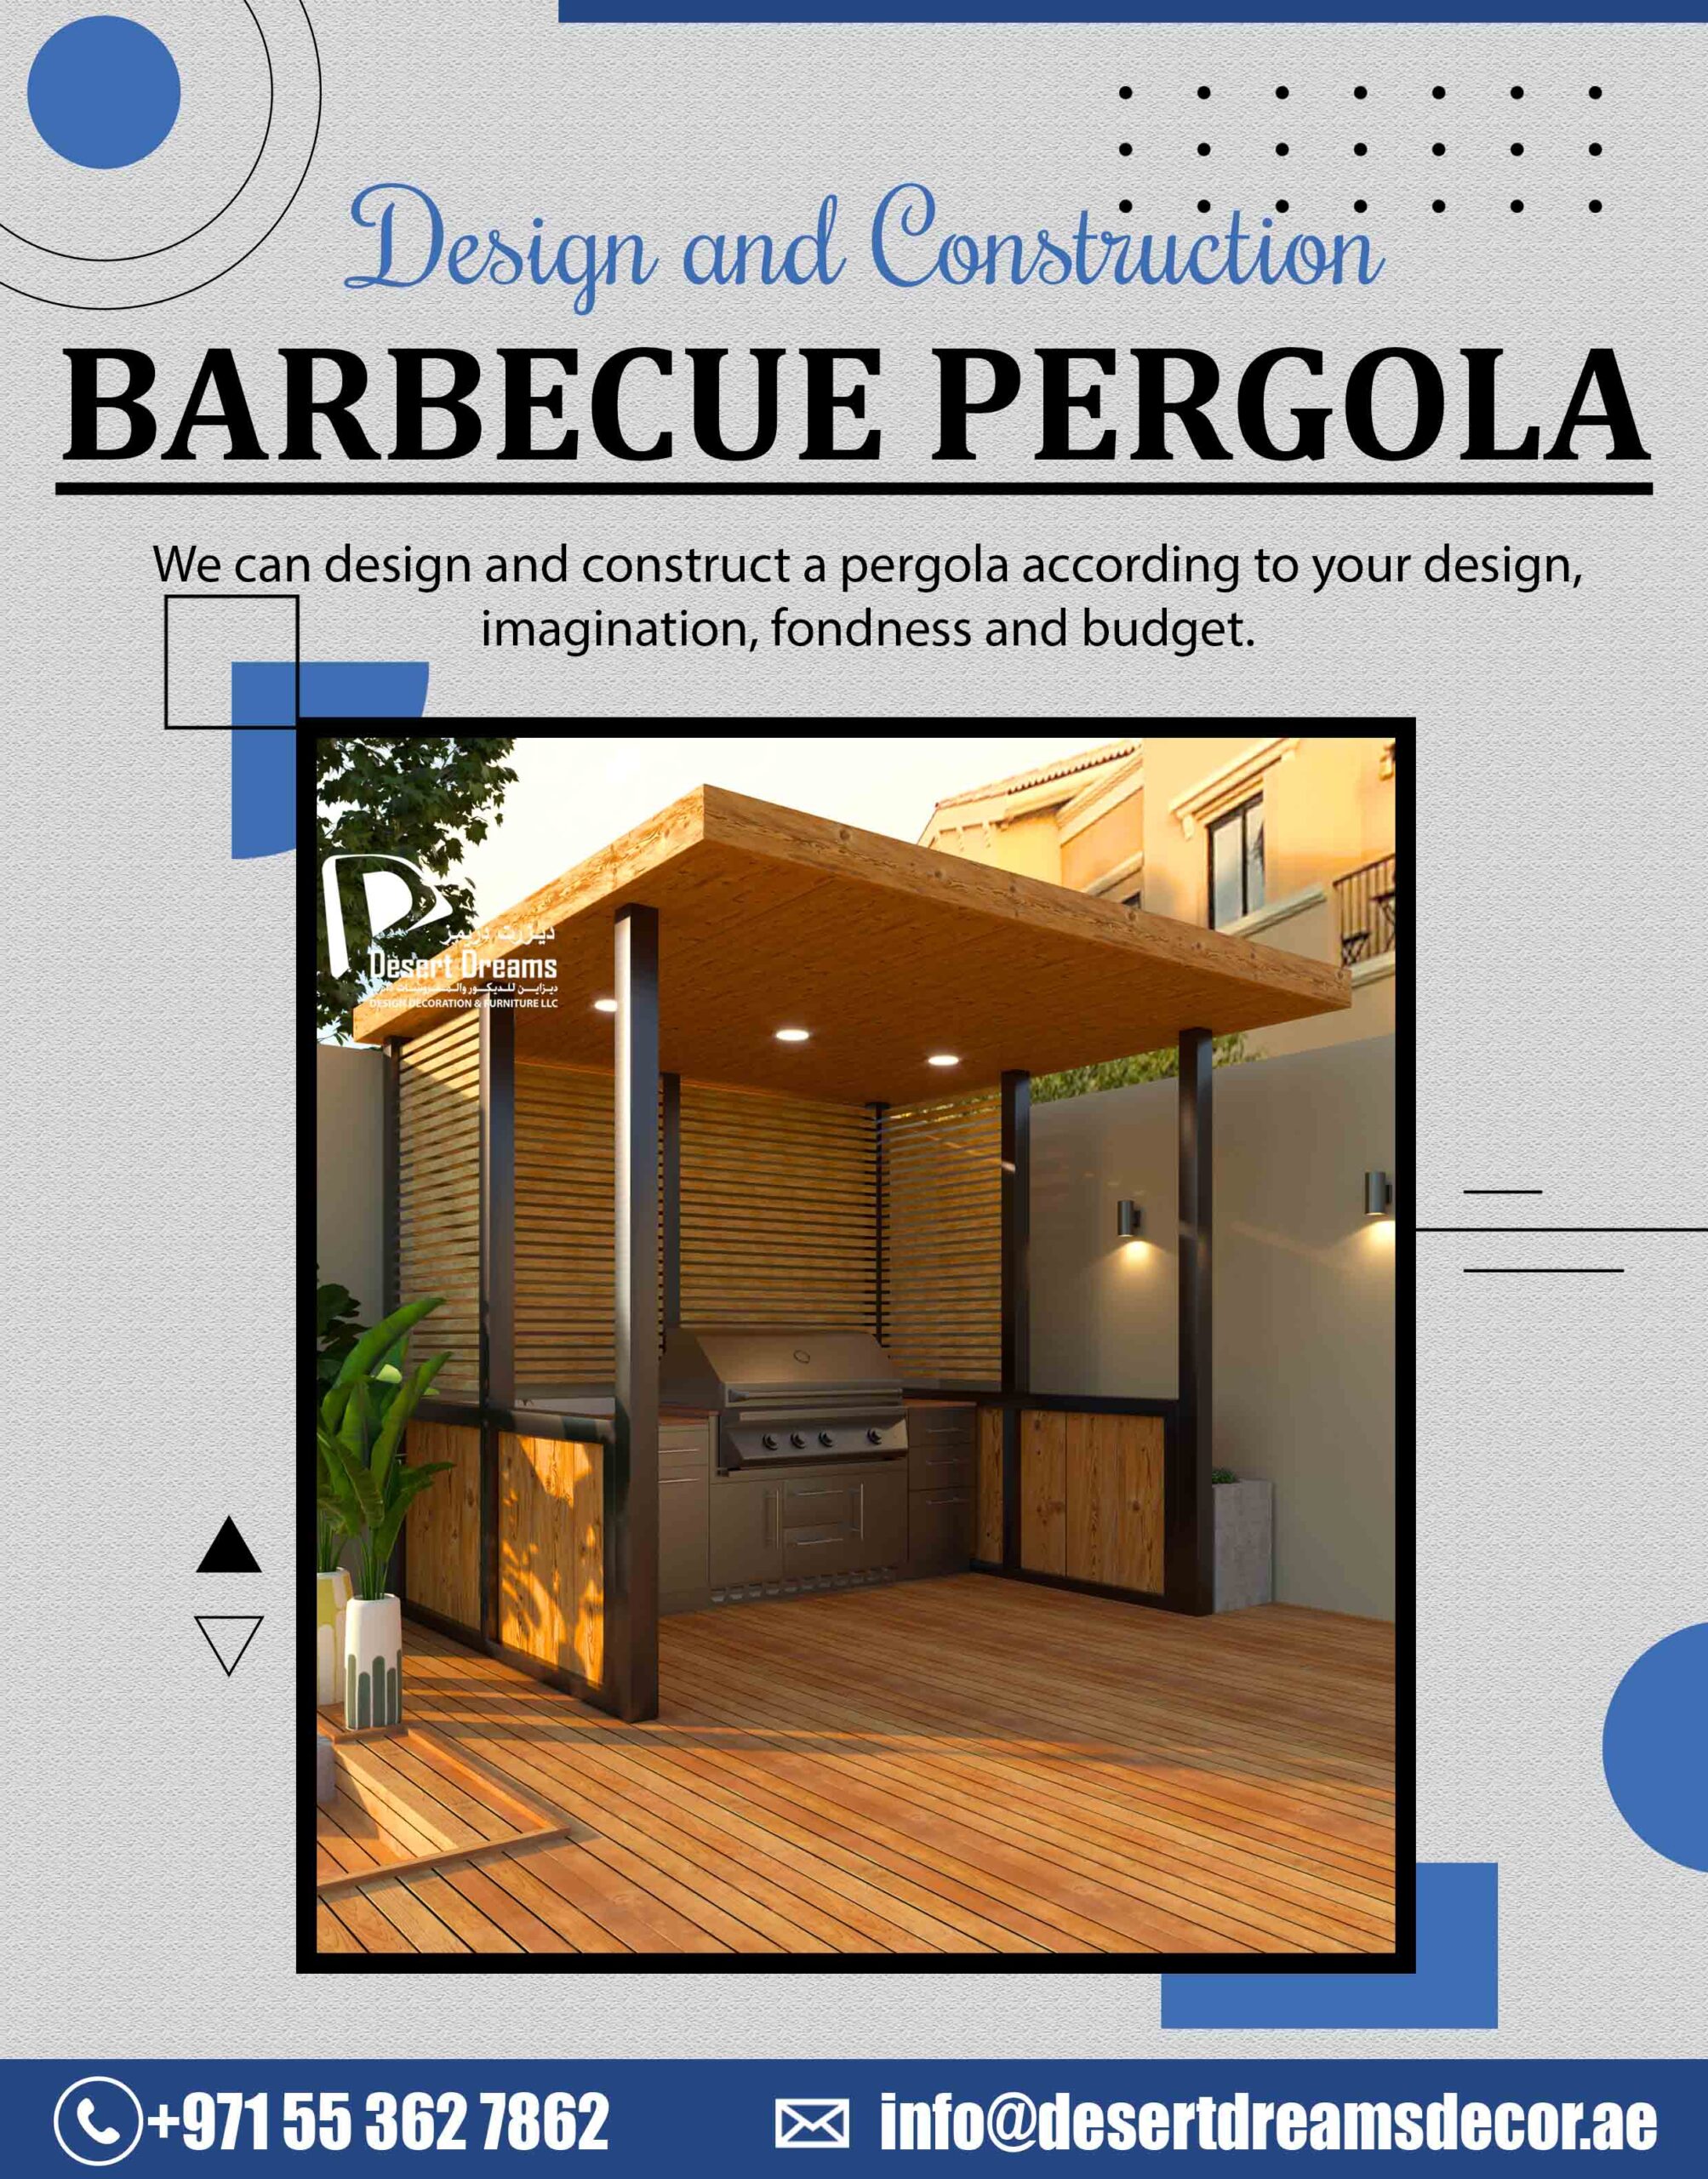 Design and Construction of Wooden Pergola in Uae (3).jpg